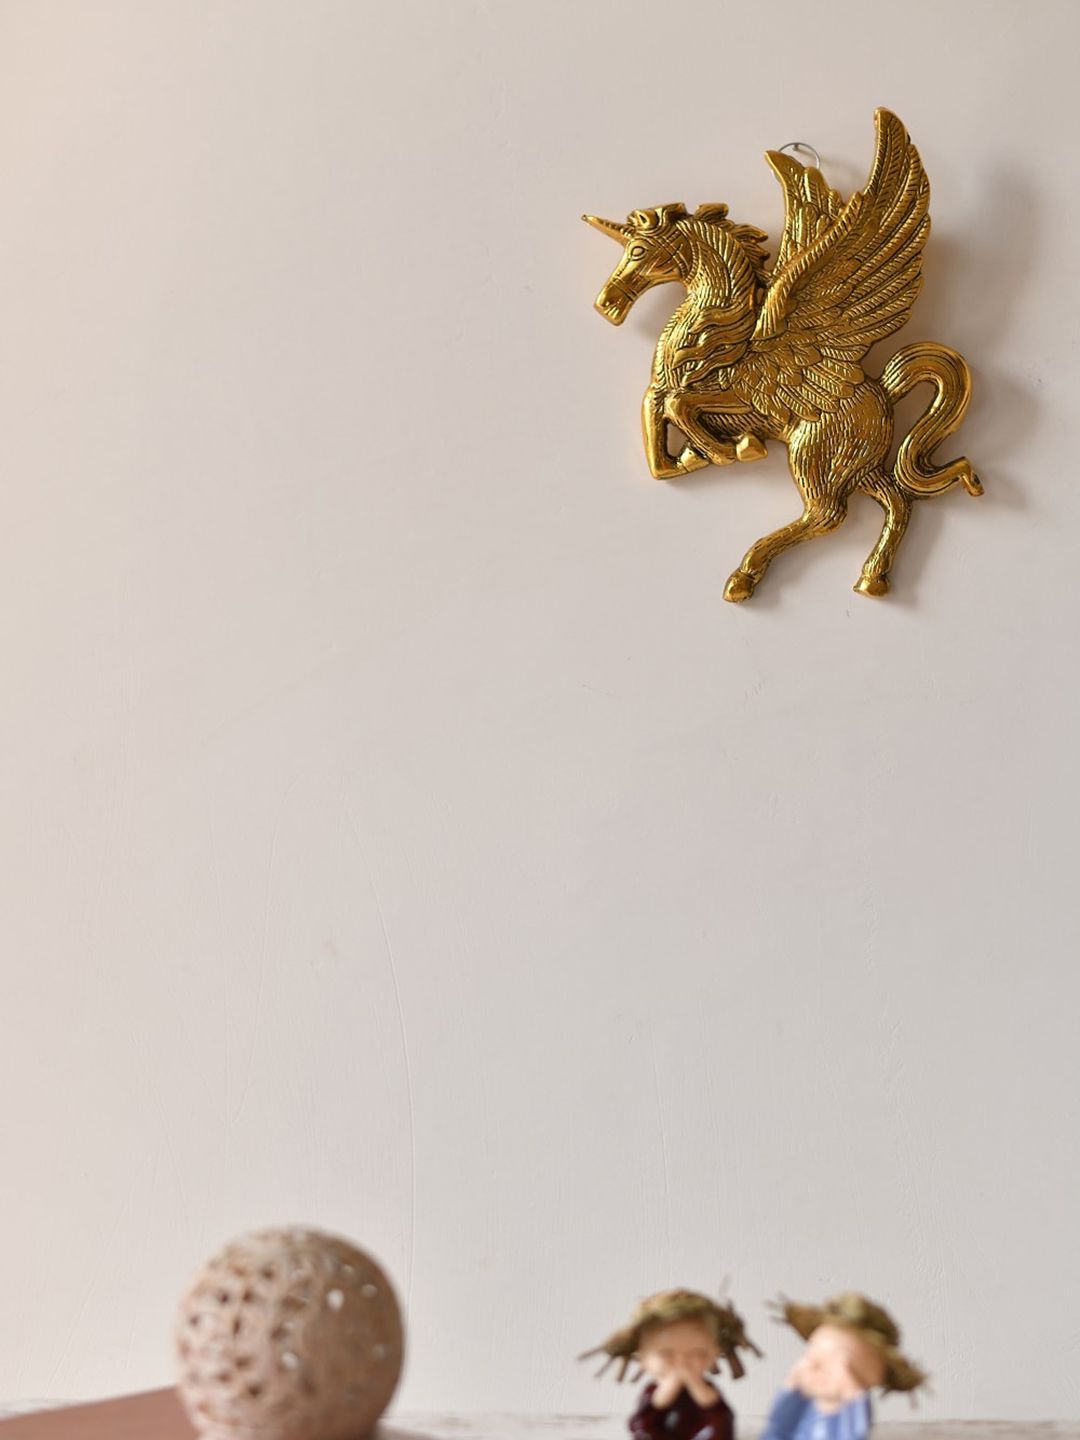 Fashion Bizz Unisex Gold-Toned Flyinghorse Figurine Showpiece Price in India